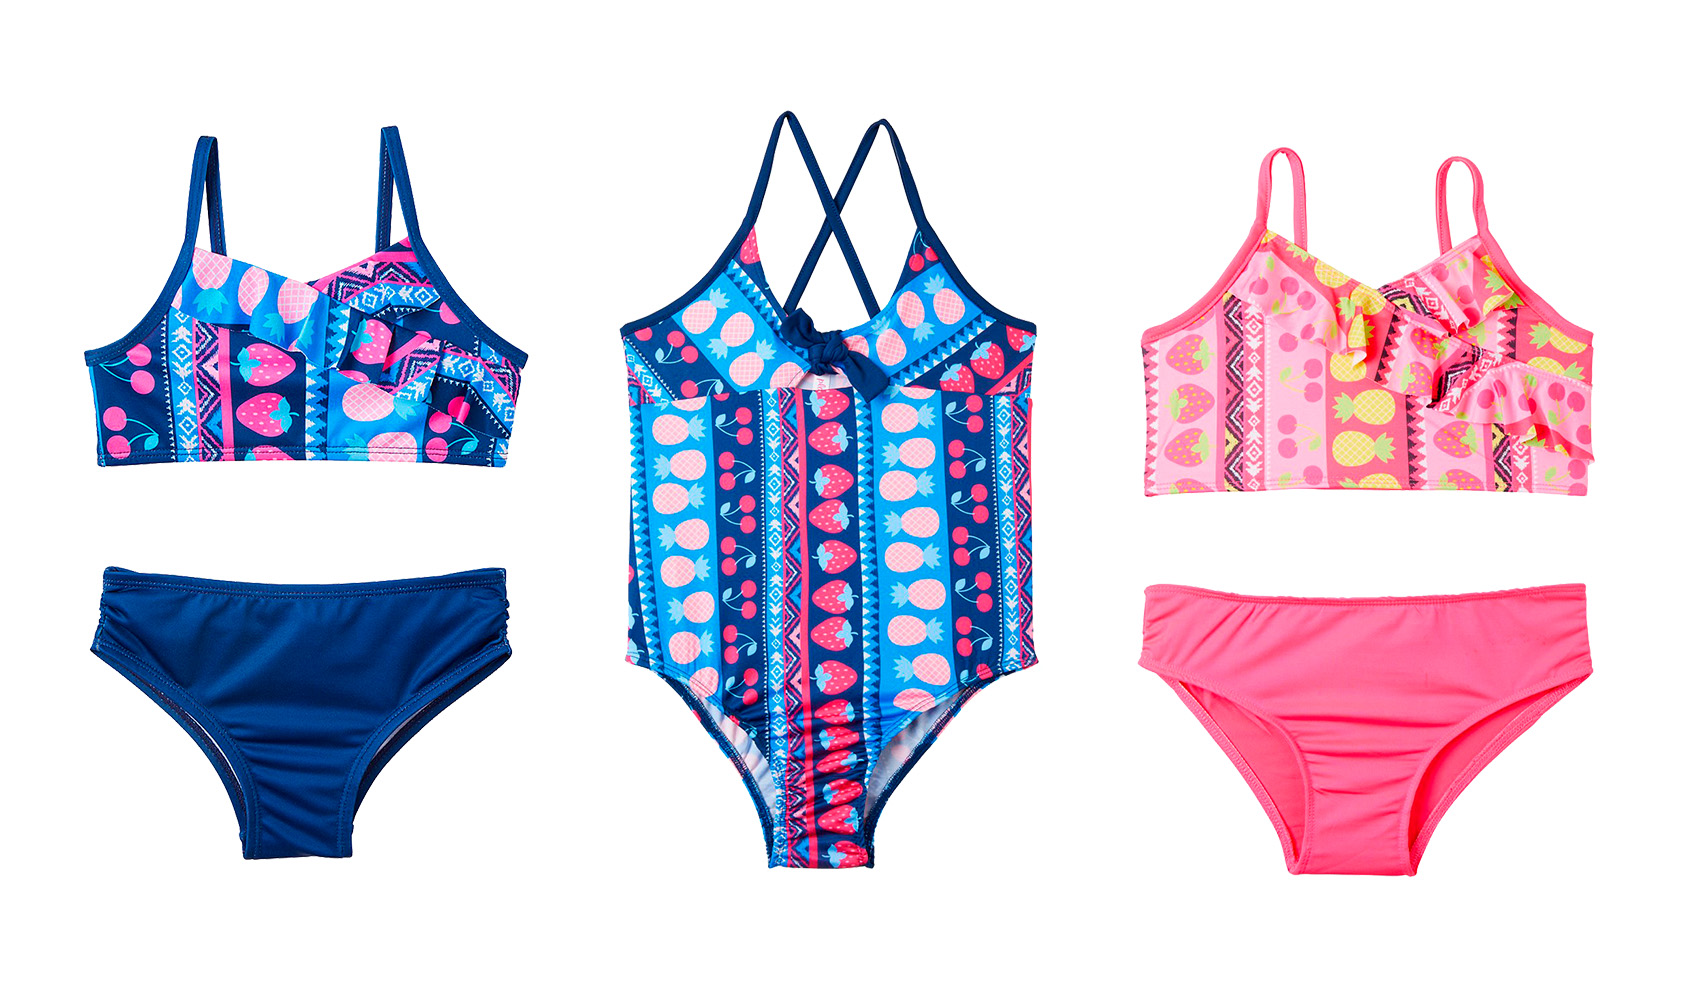 Girl's Bohemian Fashion One-Piece & Two-Piece Swimsuits - Tropical Fruit Print - Sizes 4-6X